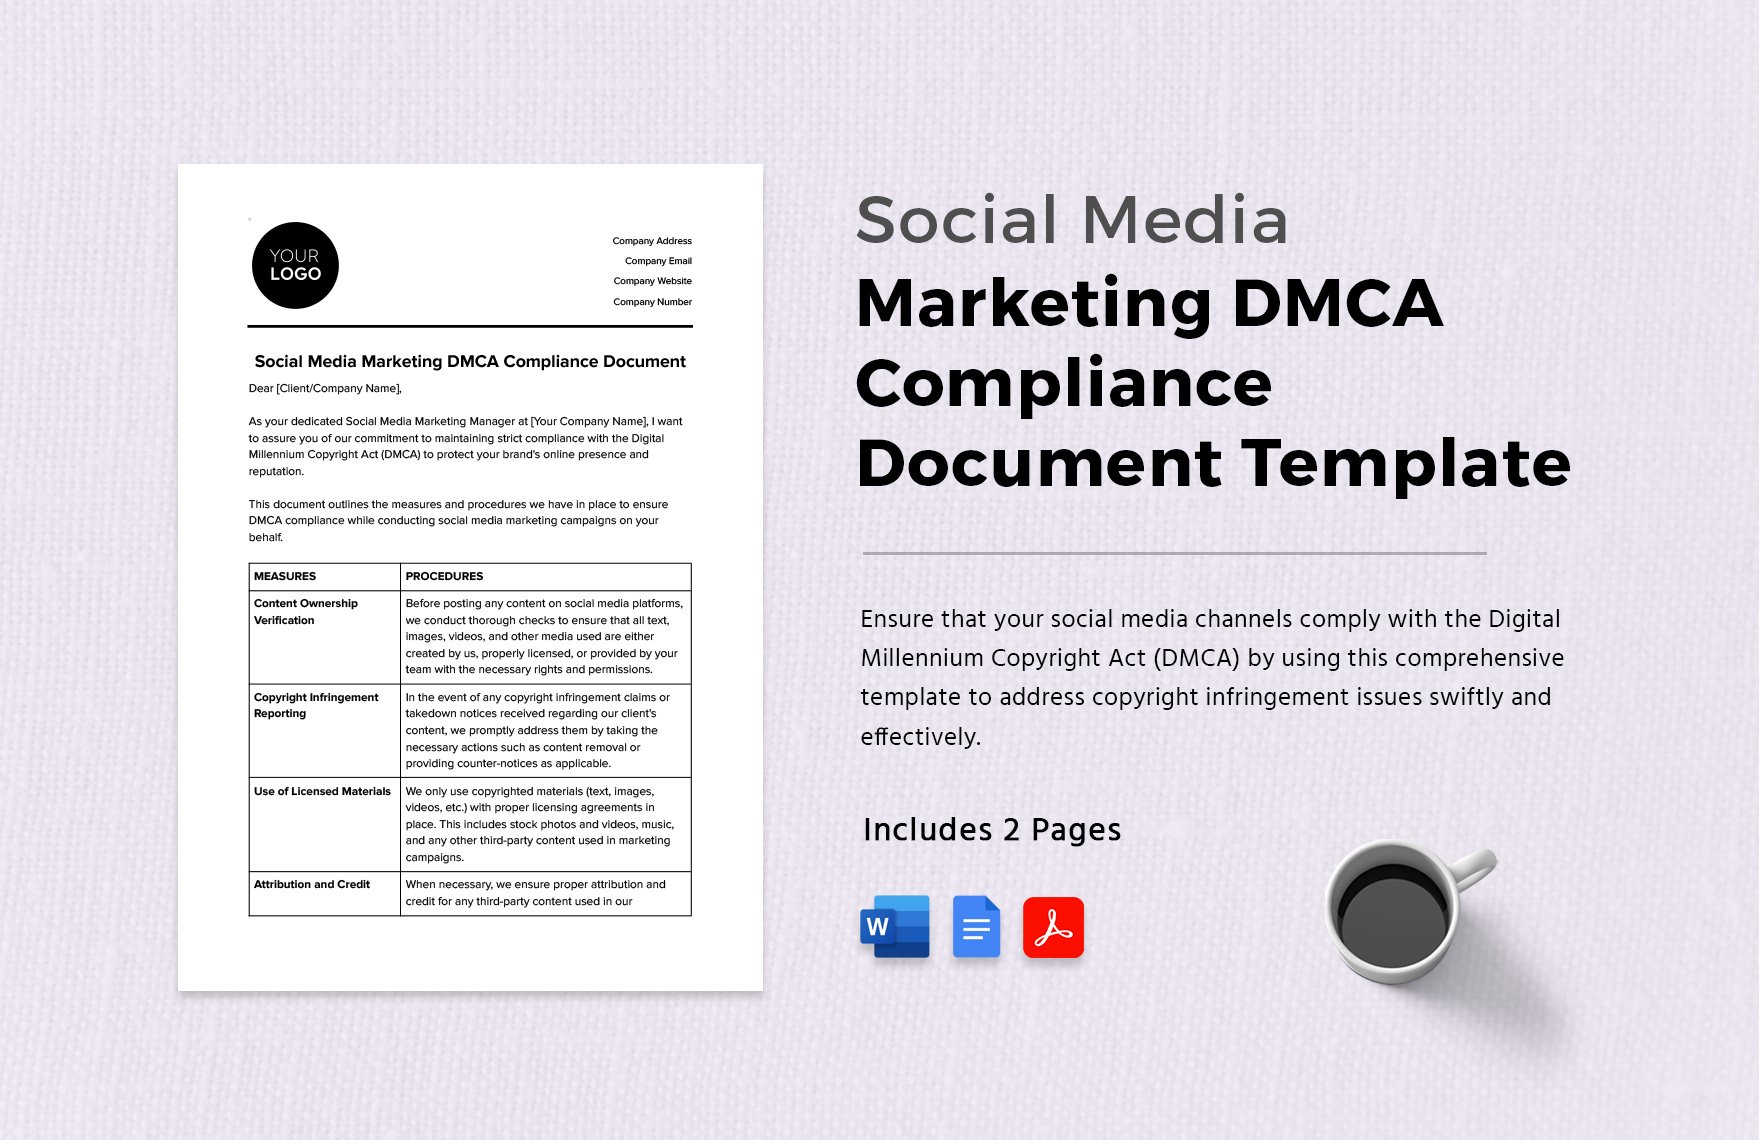 Social Media Marketing DMCA Compliance Document Template in Word, Google Docs, PDF